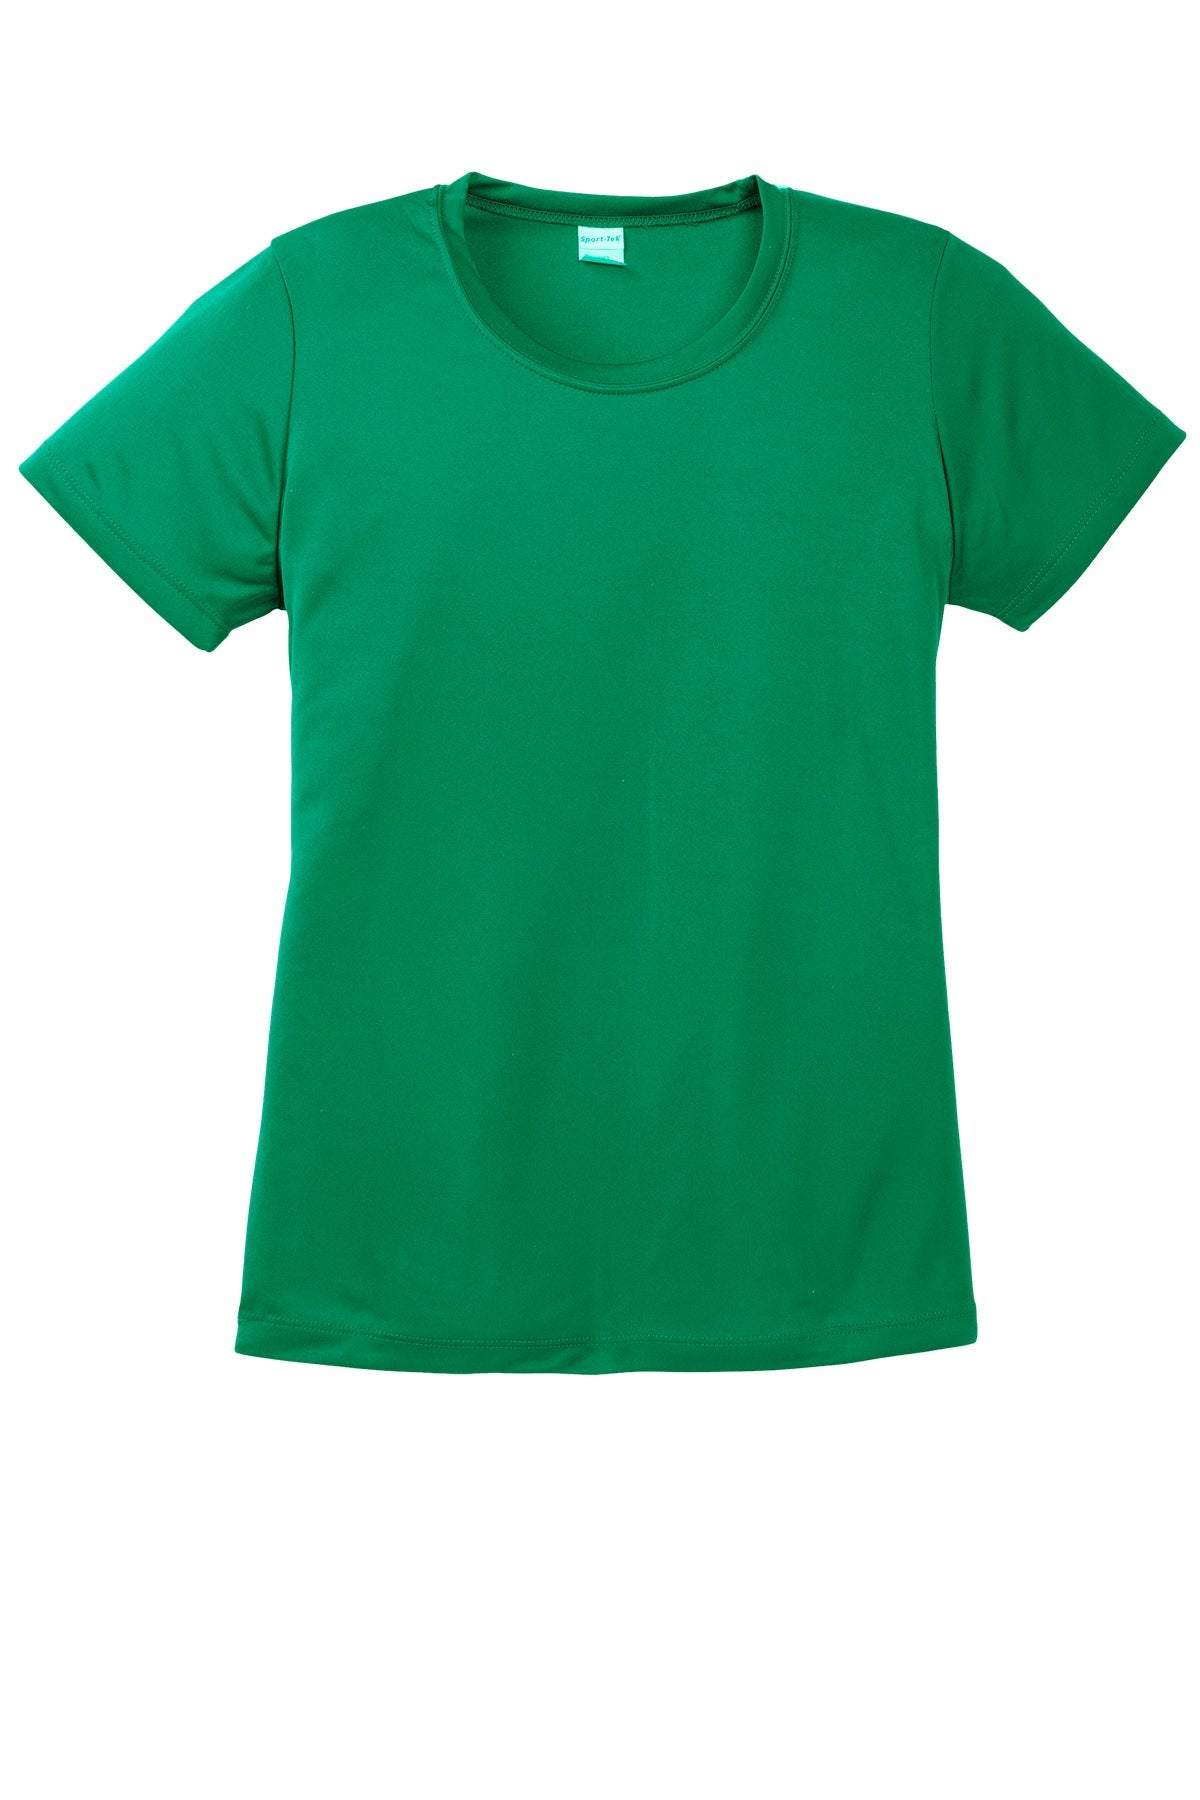 Sport-Tek Lst350 Polyester Ladies T-Shirt Ad Small / Kelly Green